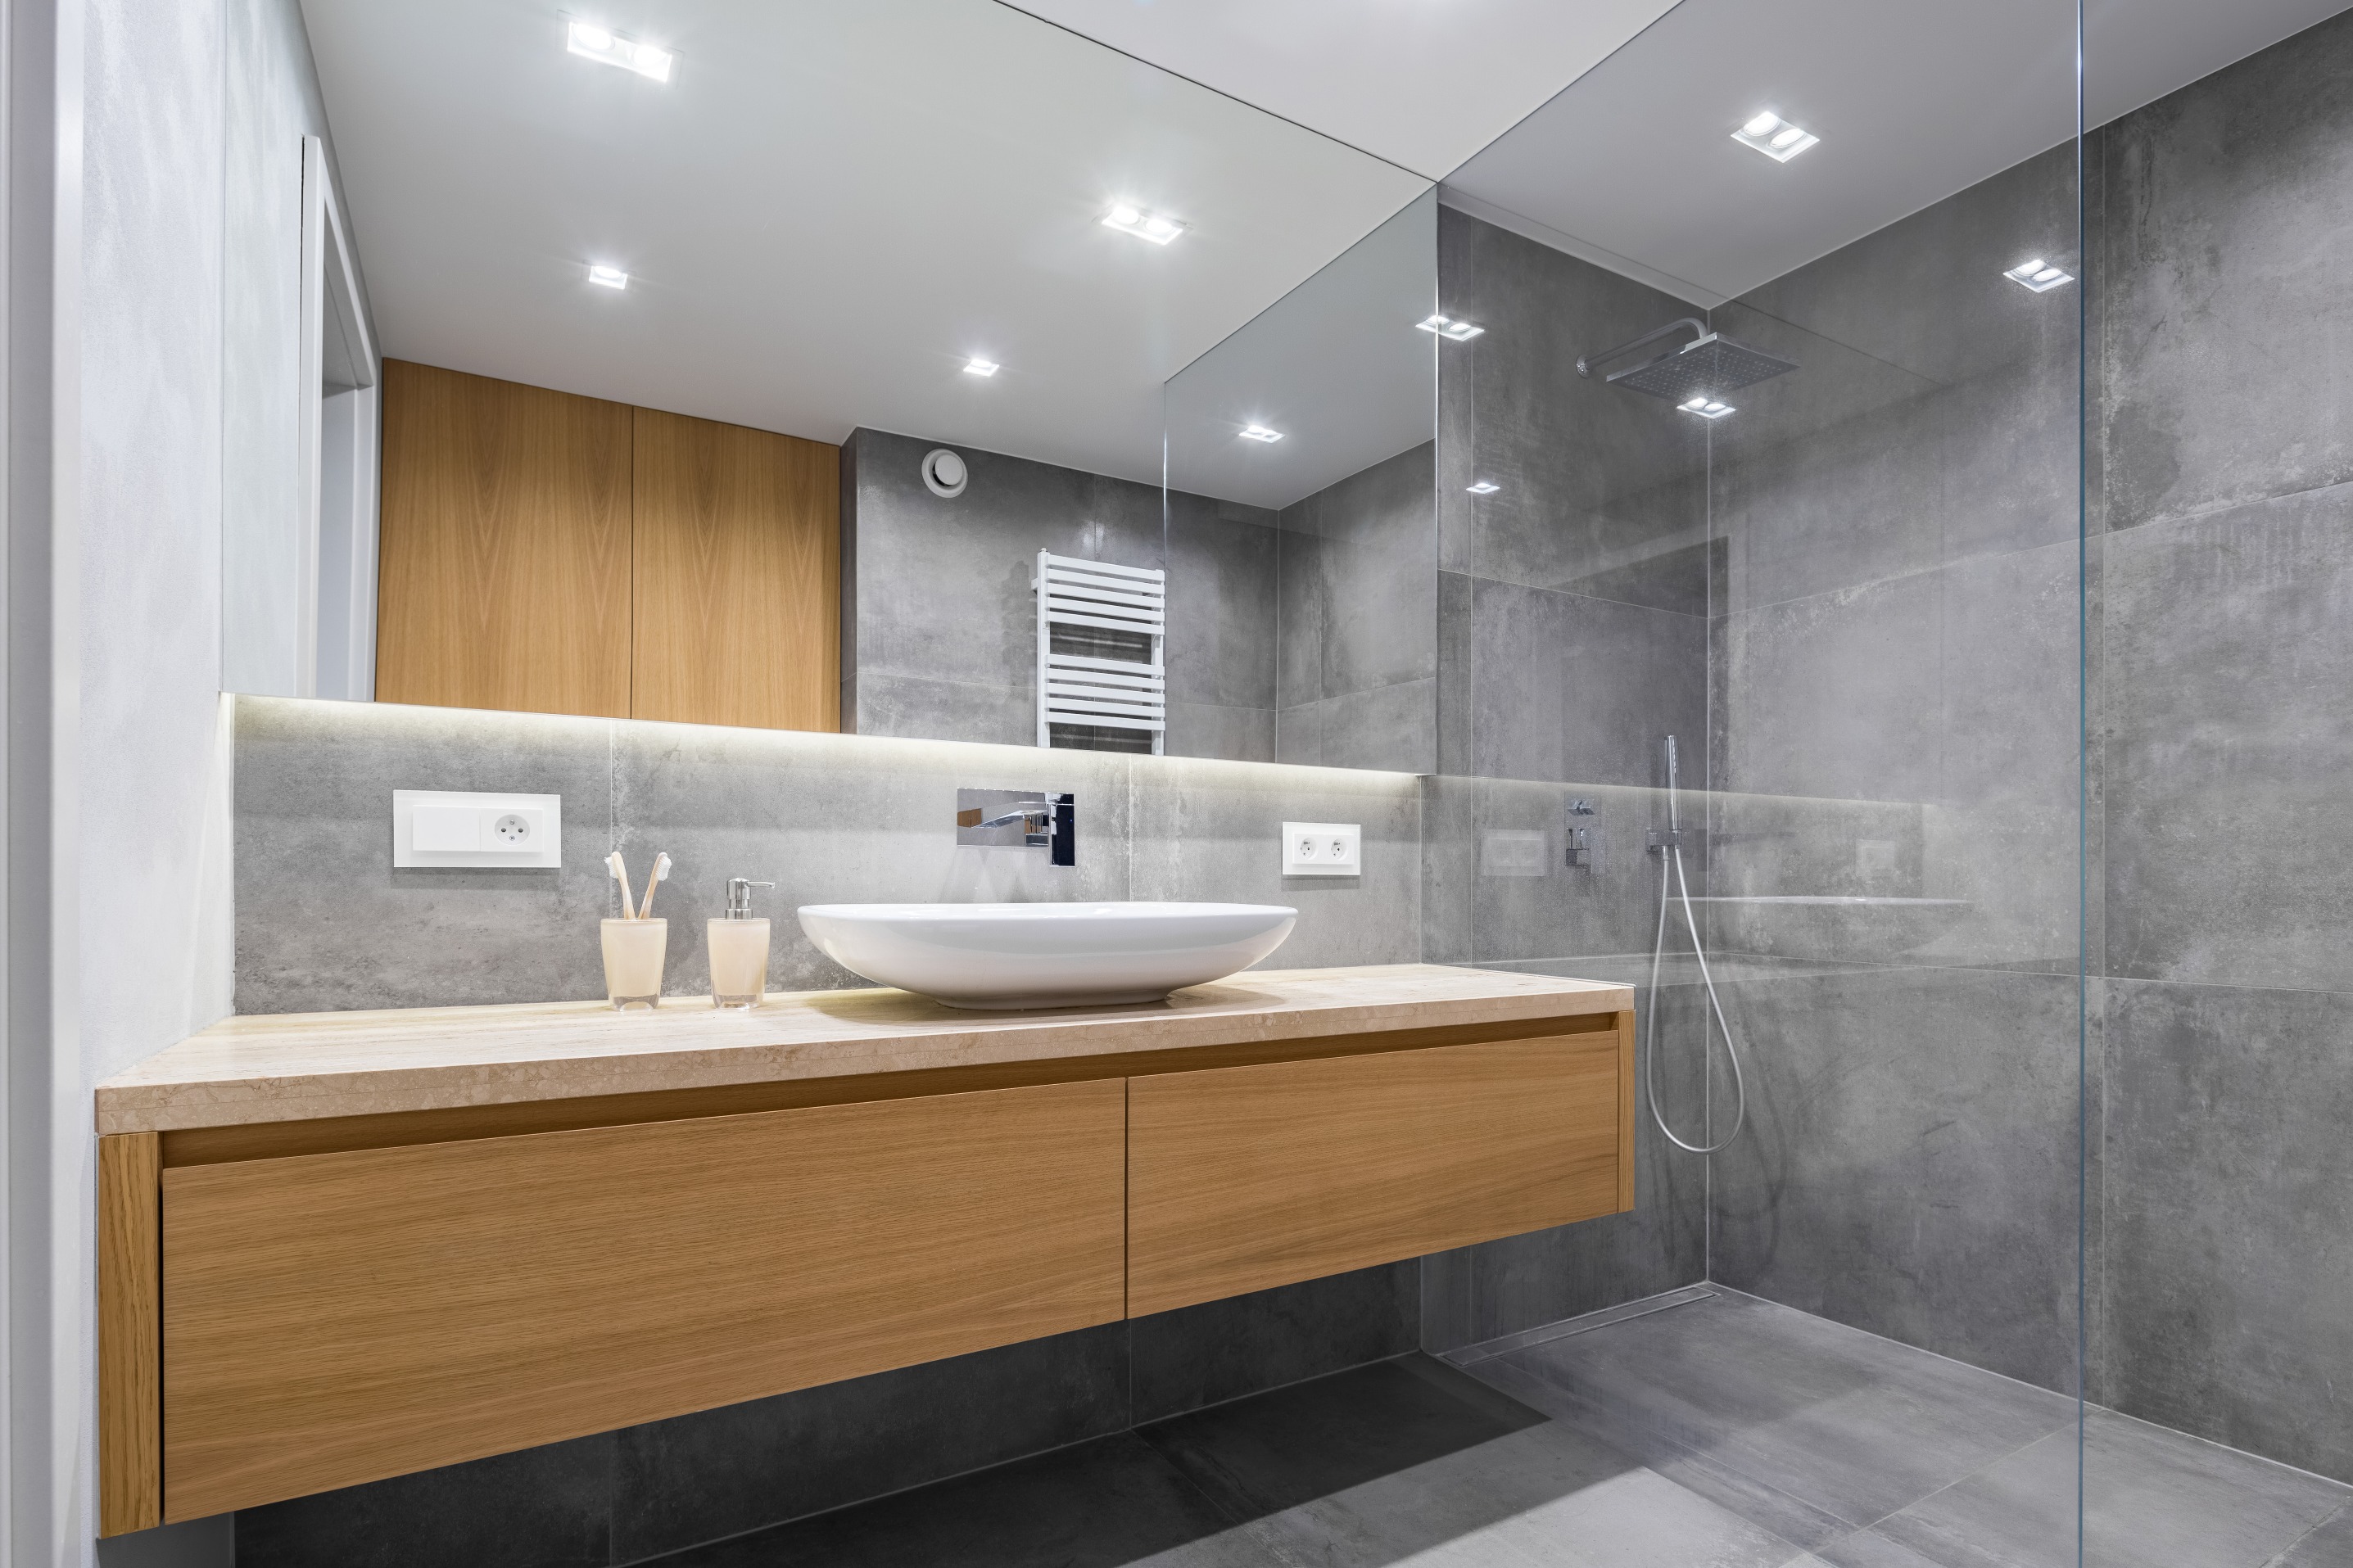 Foto: badkamer spiegel met LED verlichting